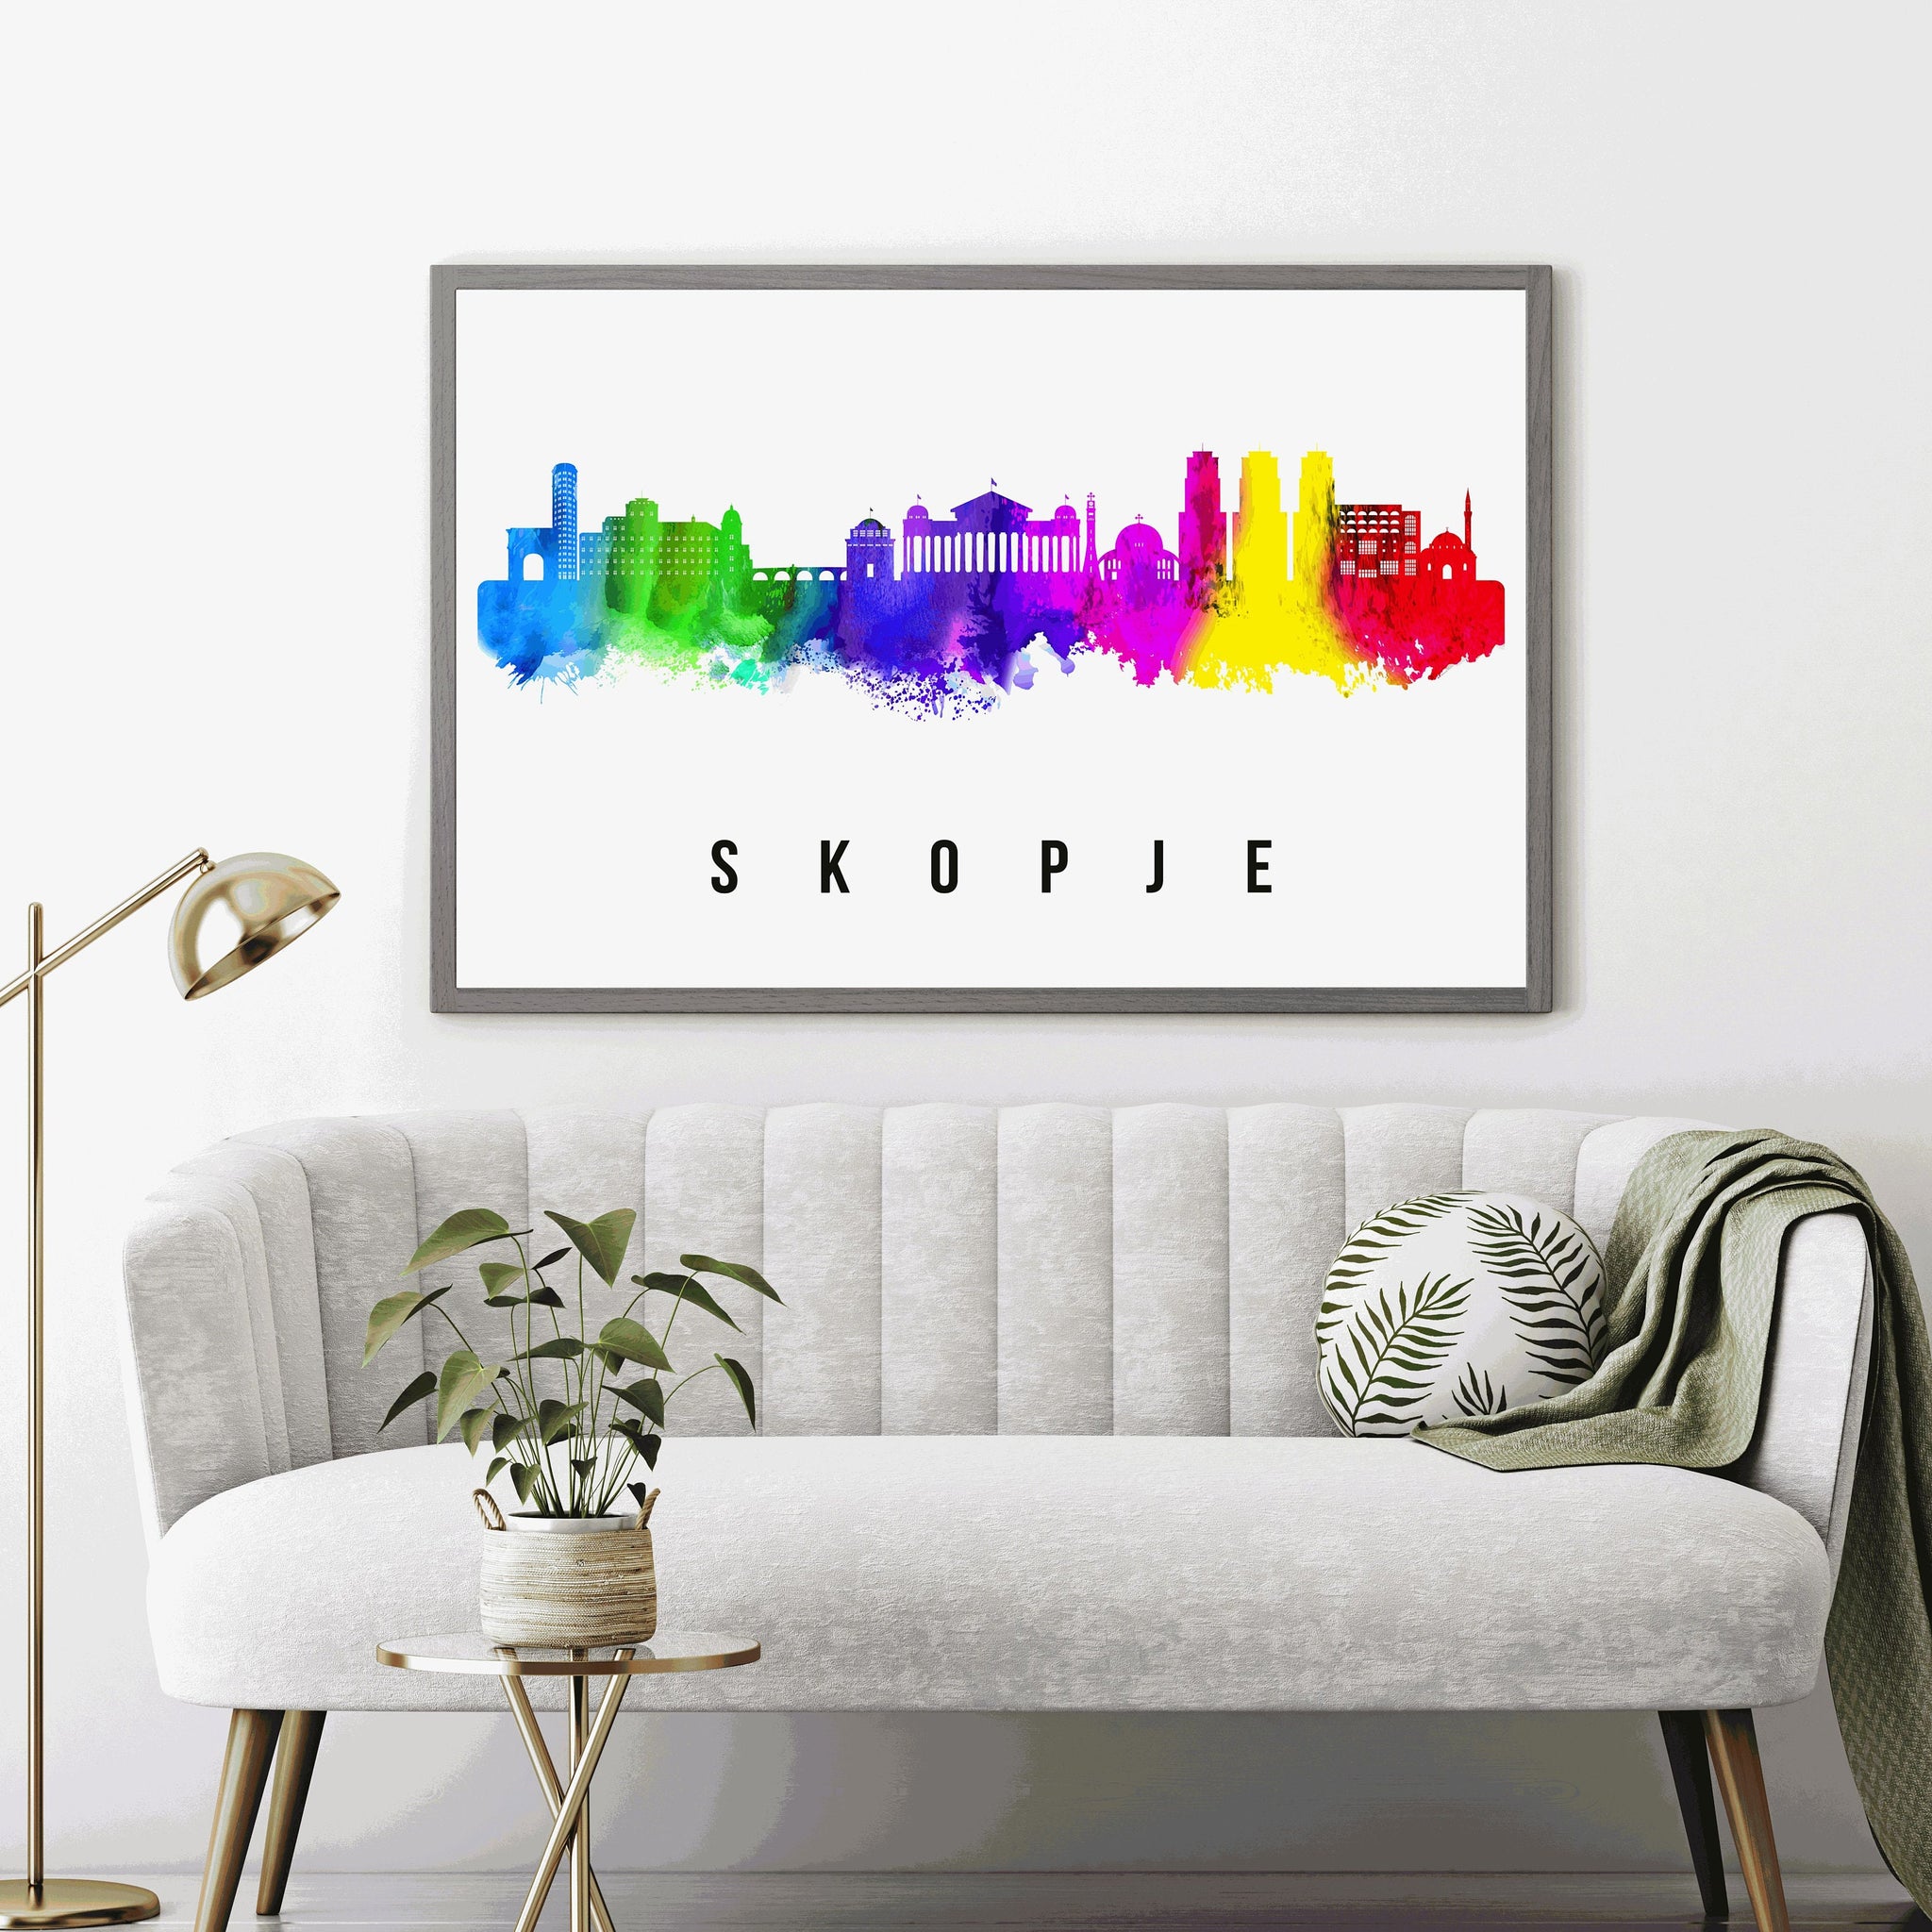 SKOPJE - MACEDONIA Poster, Skyline Poster Cityscape and Landmark Skopje City Illustration Home Wall Art, Office Decor